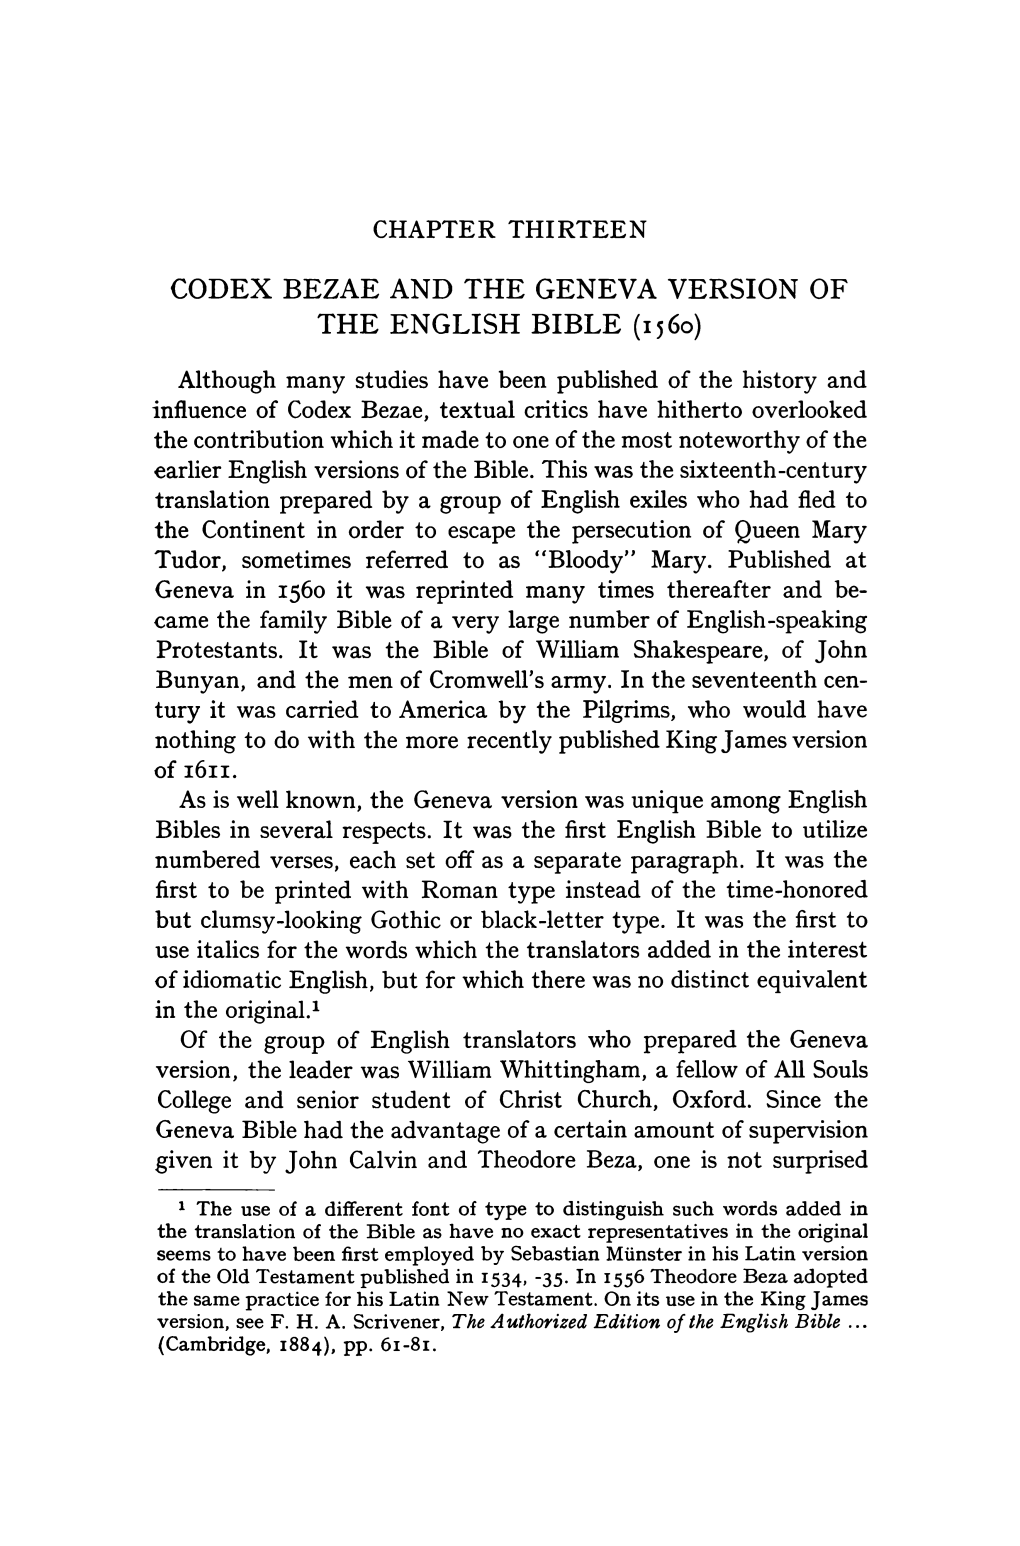 Codex Bezae and the Geneva Version of the English Bible (1560)